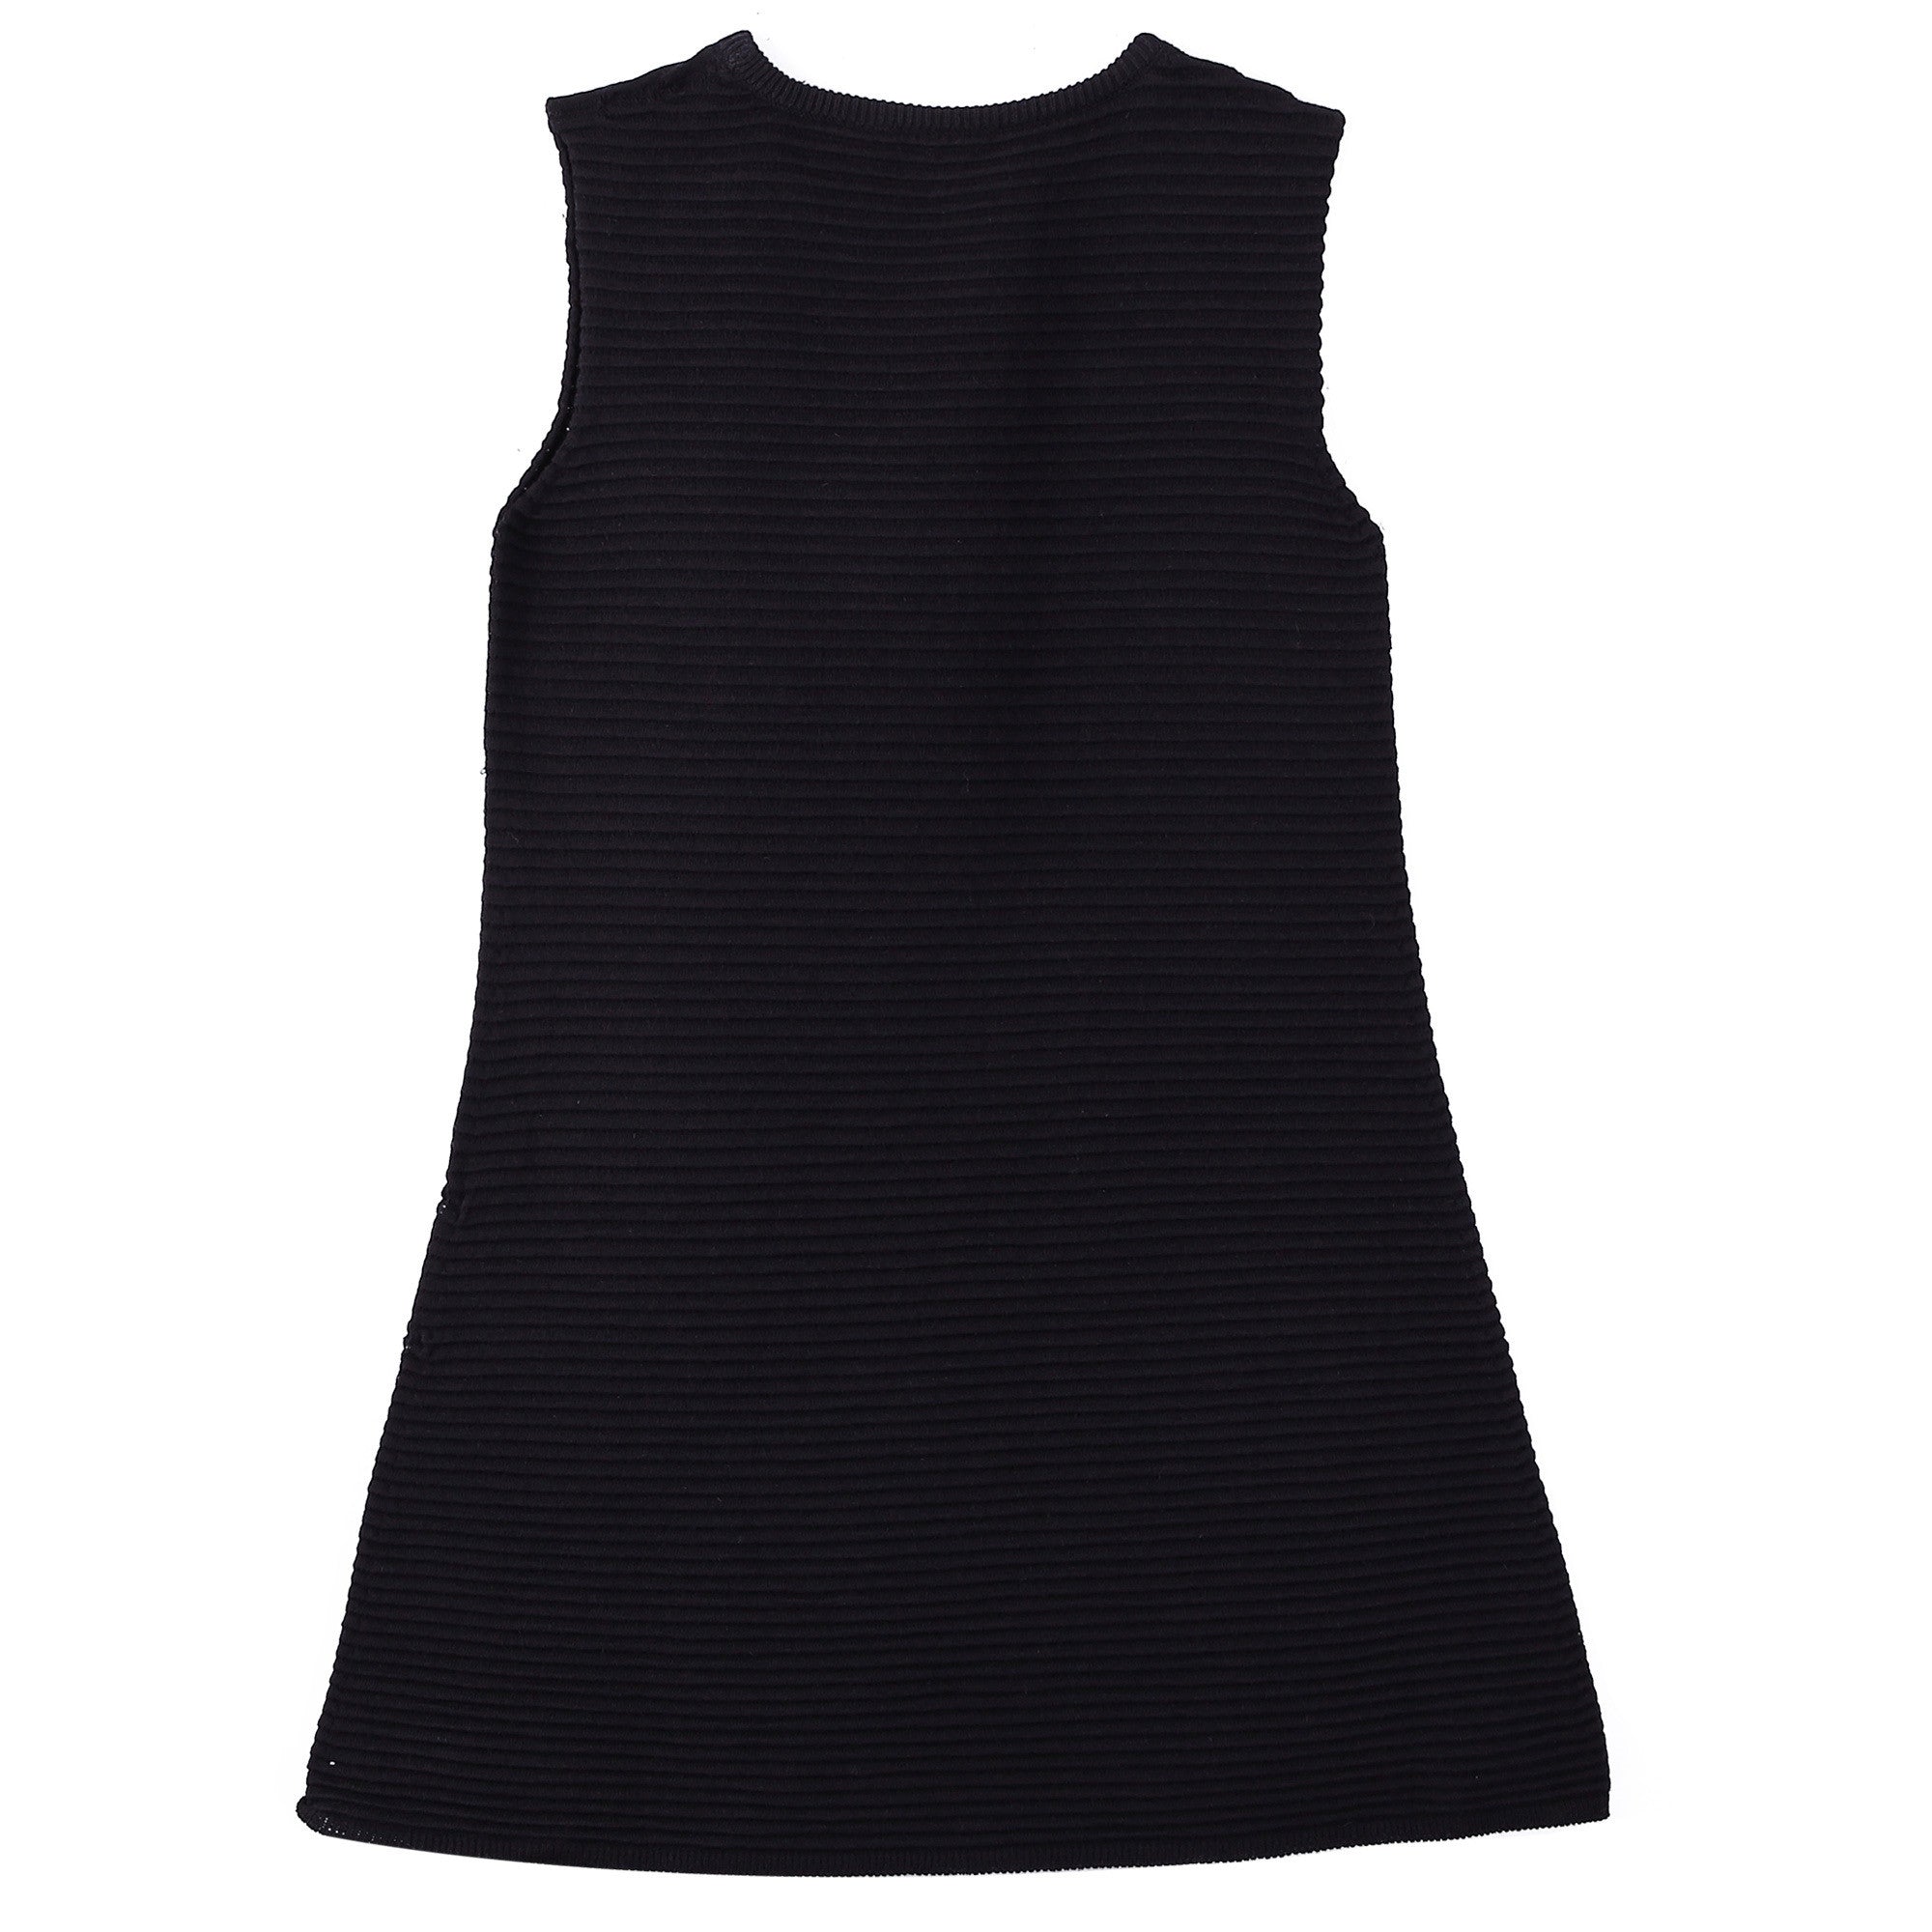 Girls Black Striped Knitted Cotton Sleeveless Dress - CÉMAROSE | Children's Fashion Store - 2